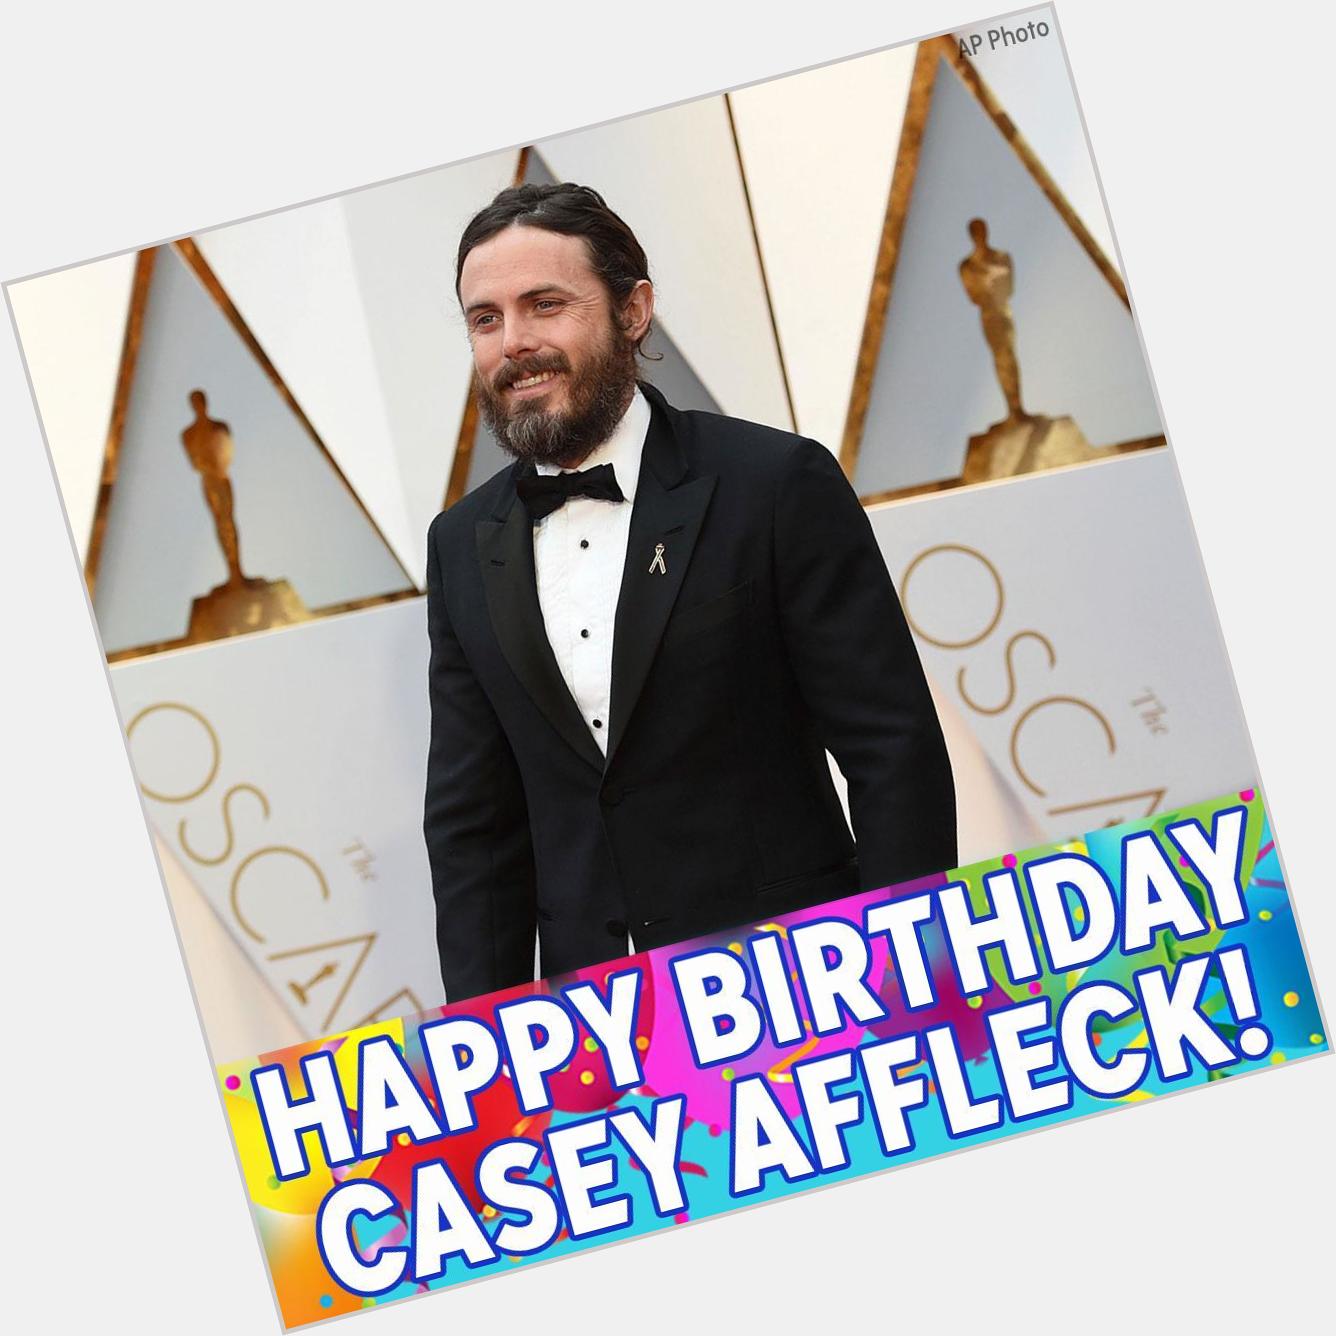 Happy Birthday to Oscar-winning actor Casey Affleck! 